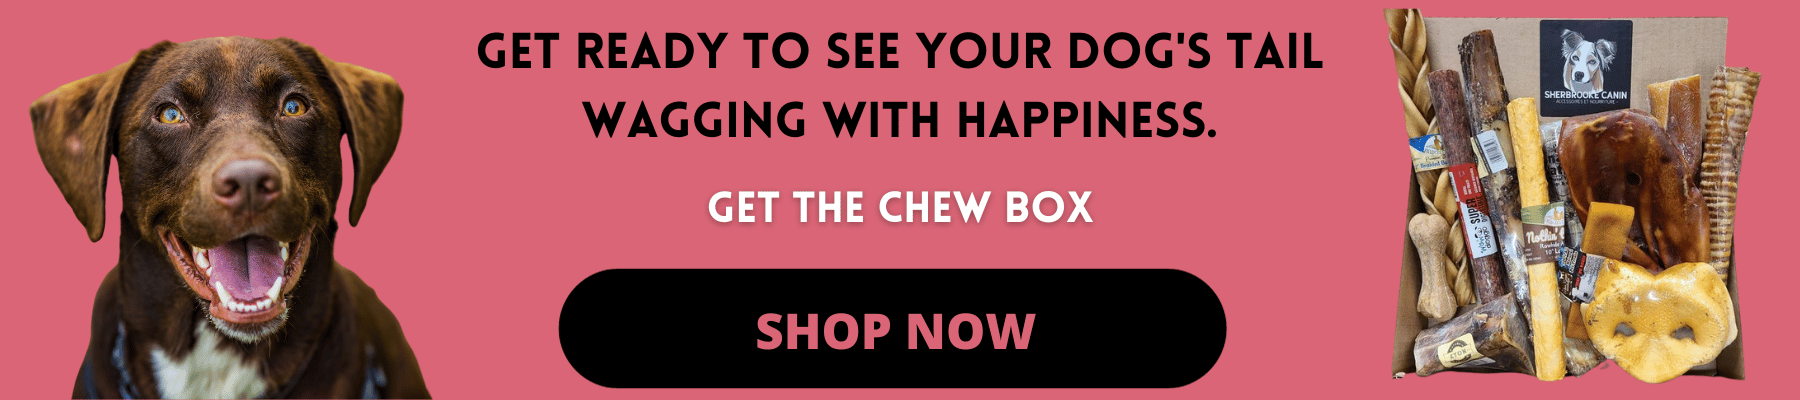 DOG CHEW BOX